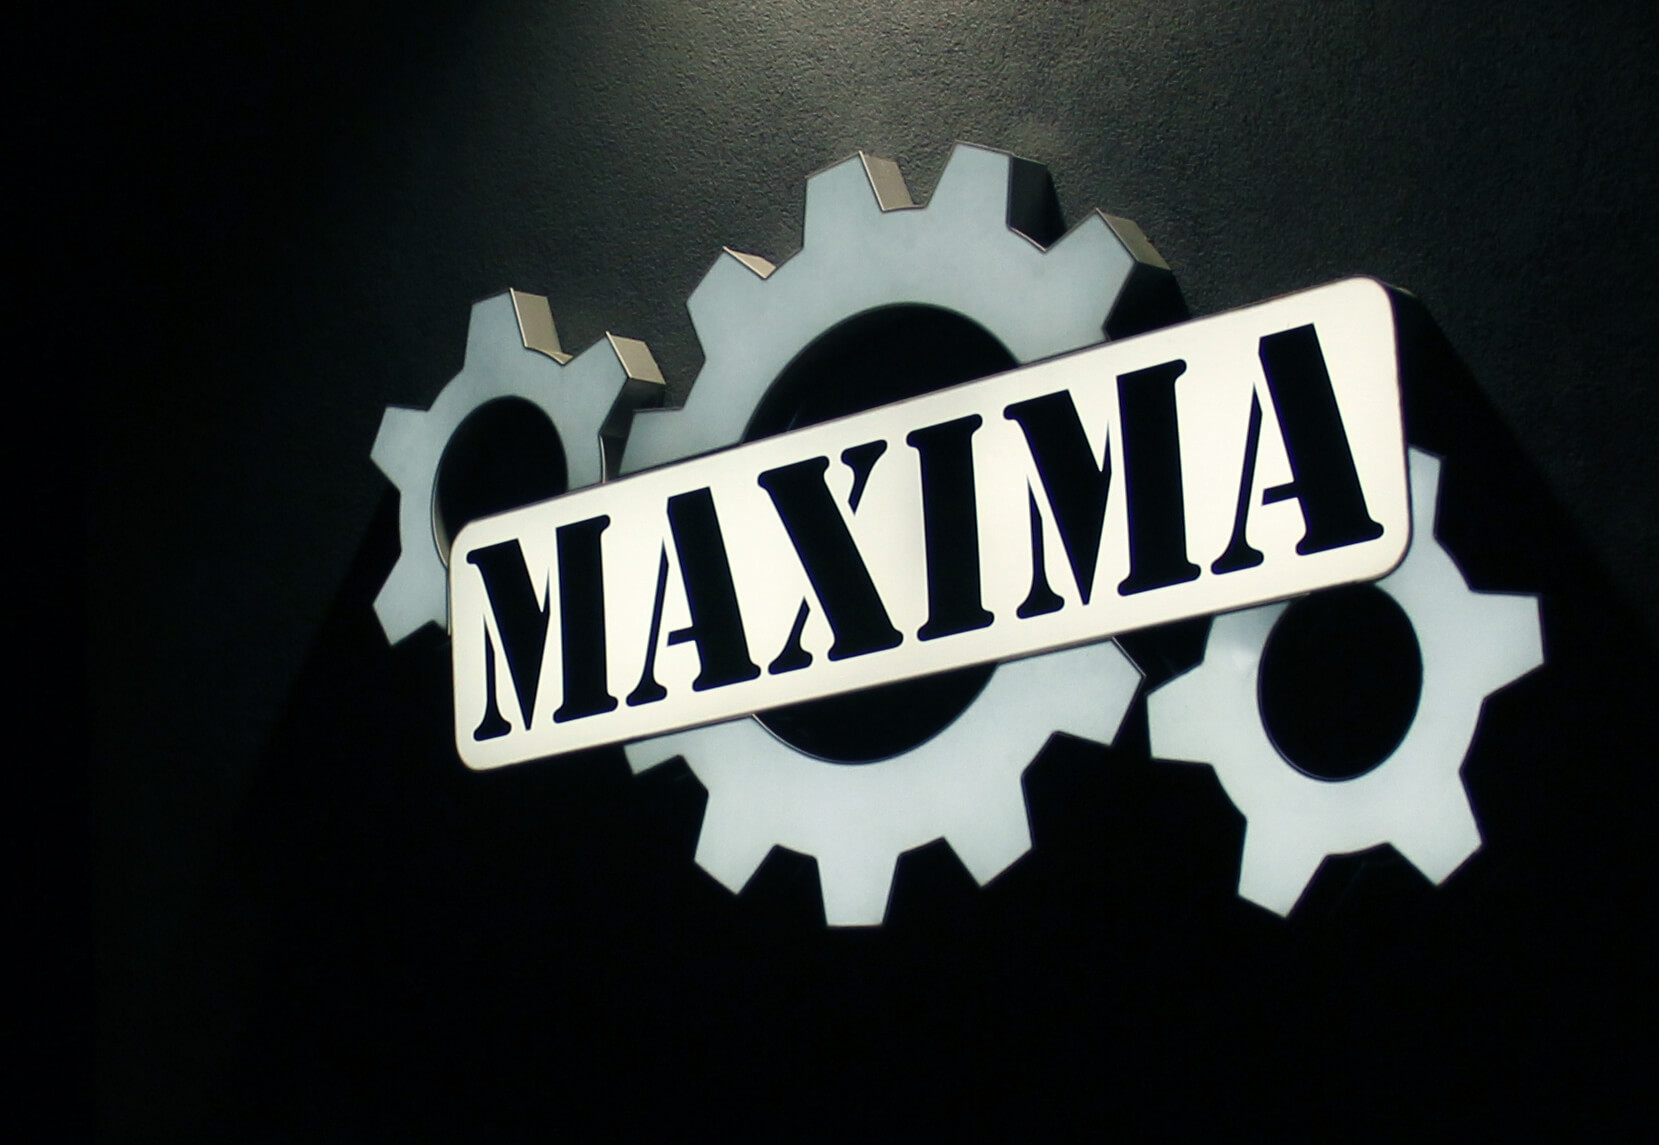 Maxima - Maxima - LED-Wandpaneel mit Firmenlogo, aus Plexiglas